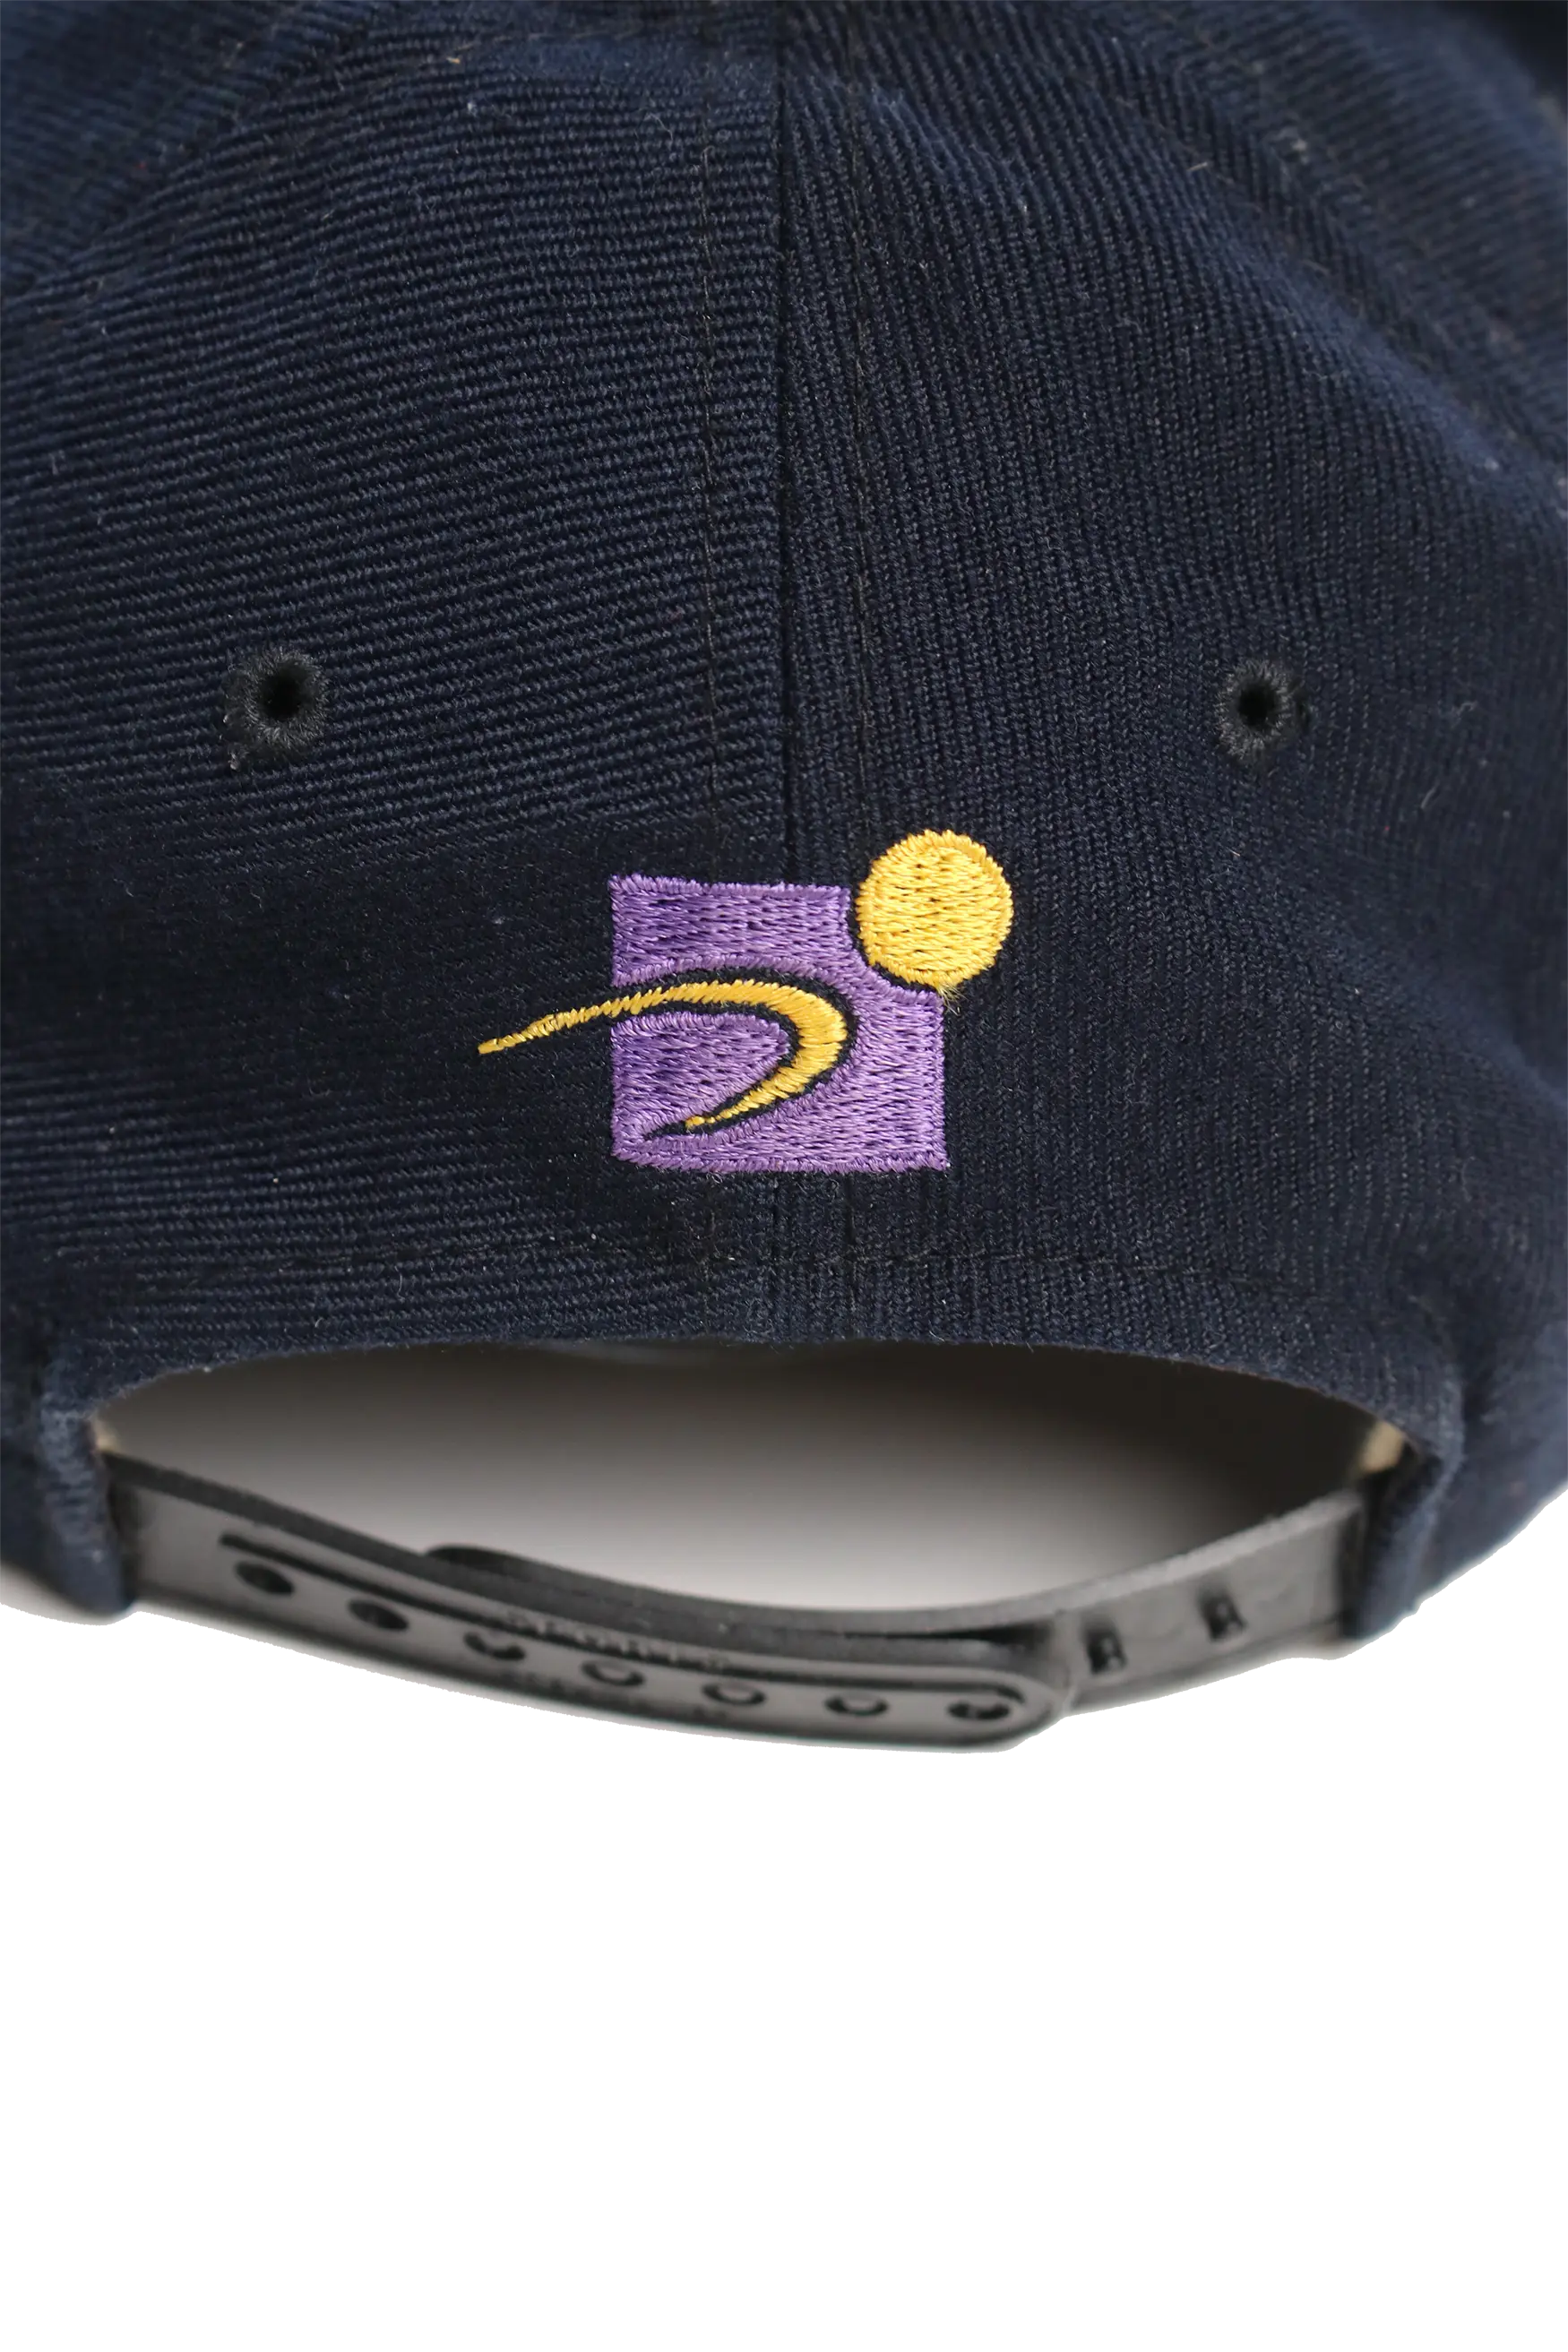 Lakers Vintage Cap